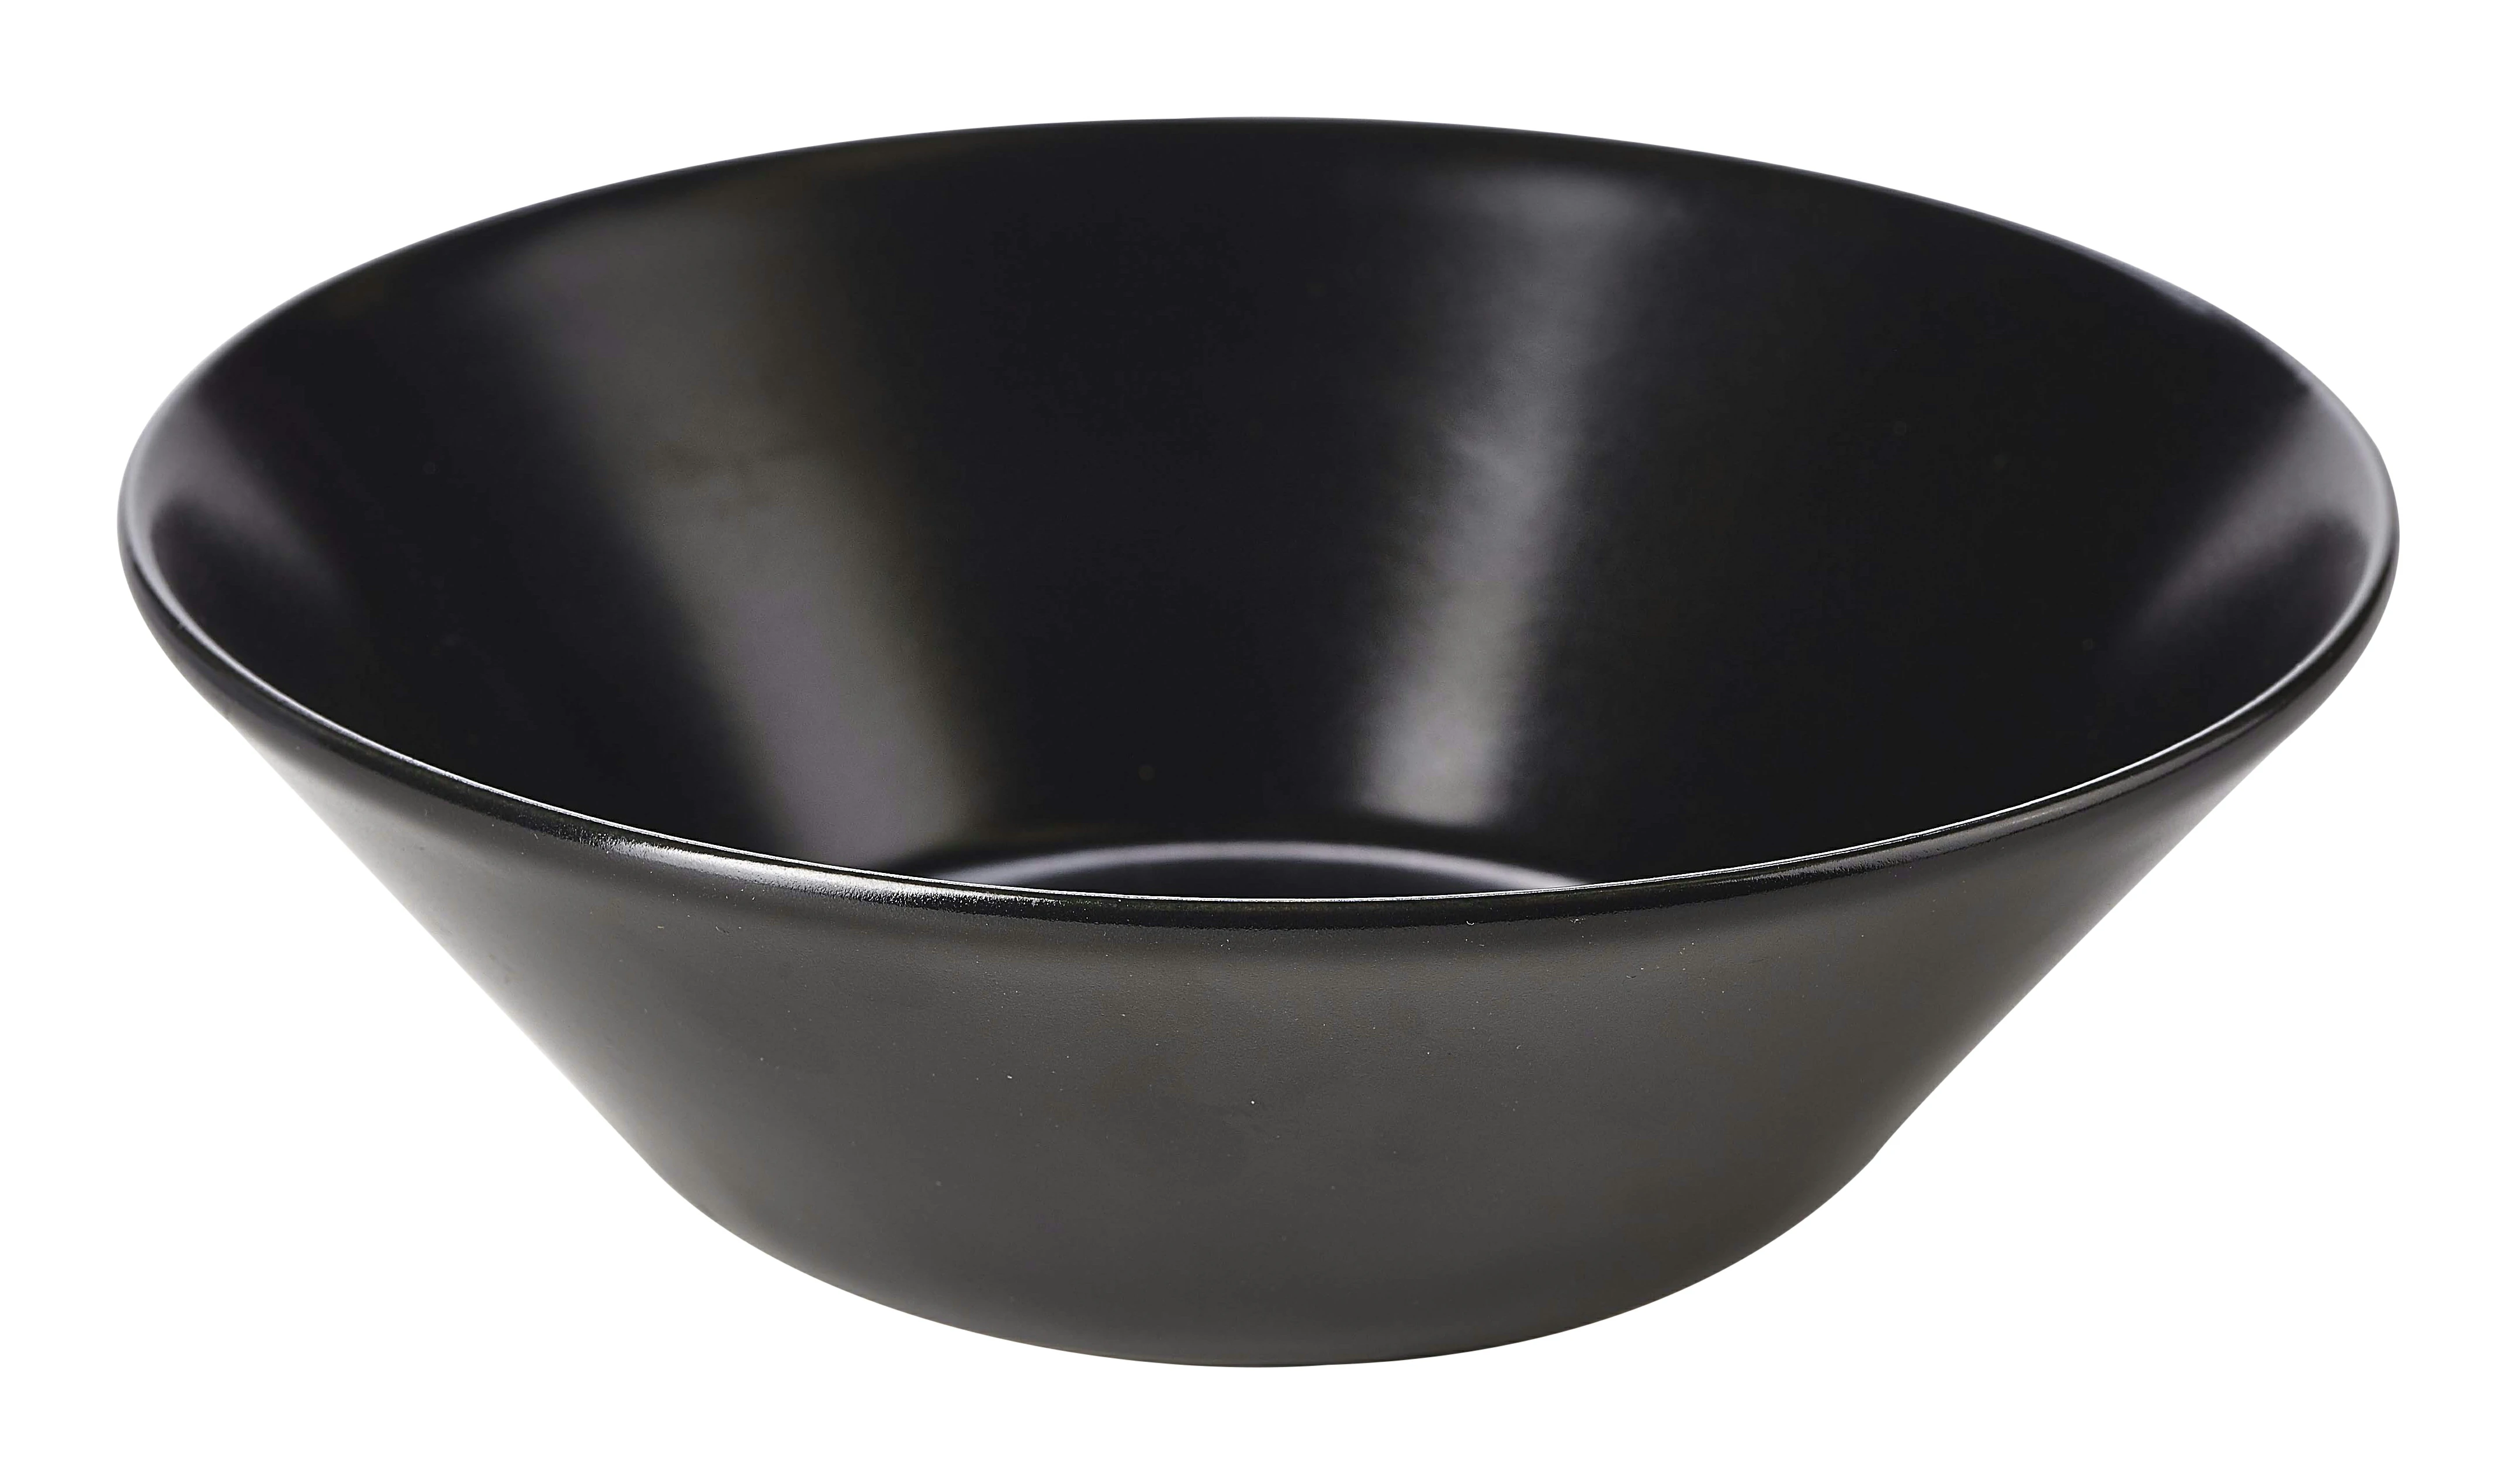 Luna Stoneware Black Serving Bowl 24 x 8cm/9.5 x 3.25"